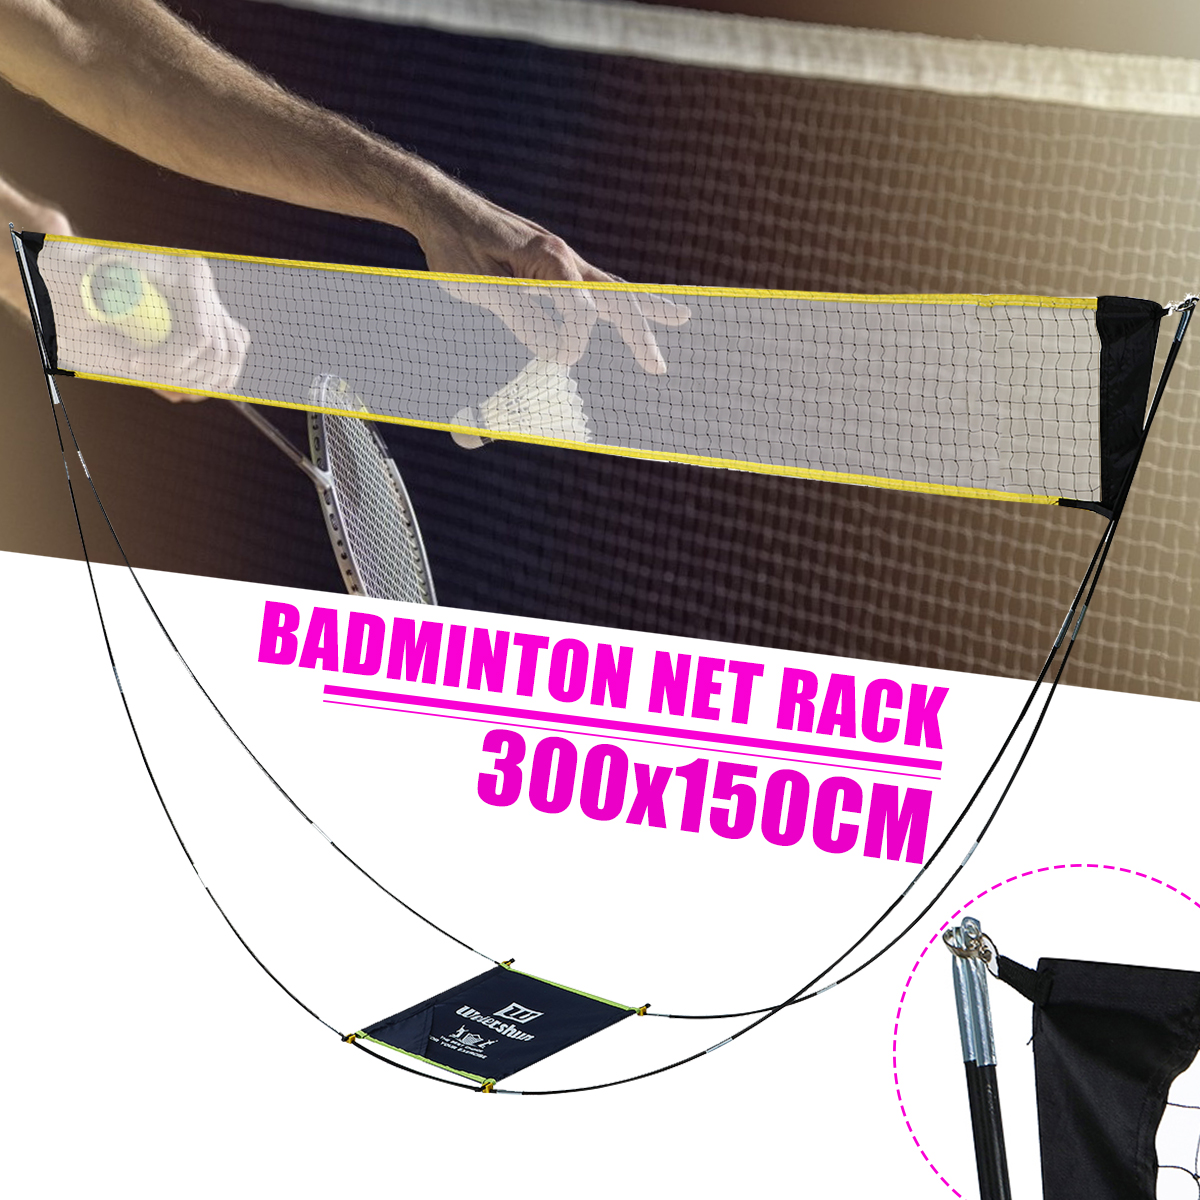 300x150CM-Standard-Outdoor-Badminton-Tennis-Net-Replacement-Badminton-Net-Professional-Training-Spor-1724984-1